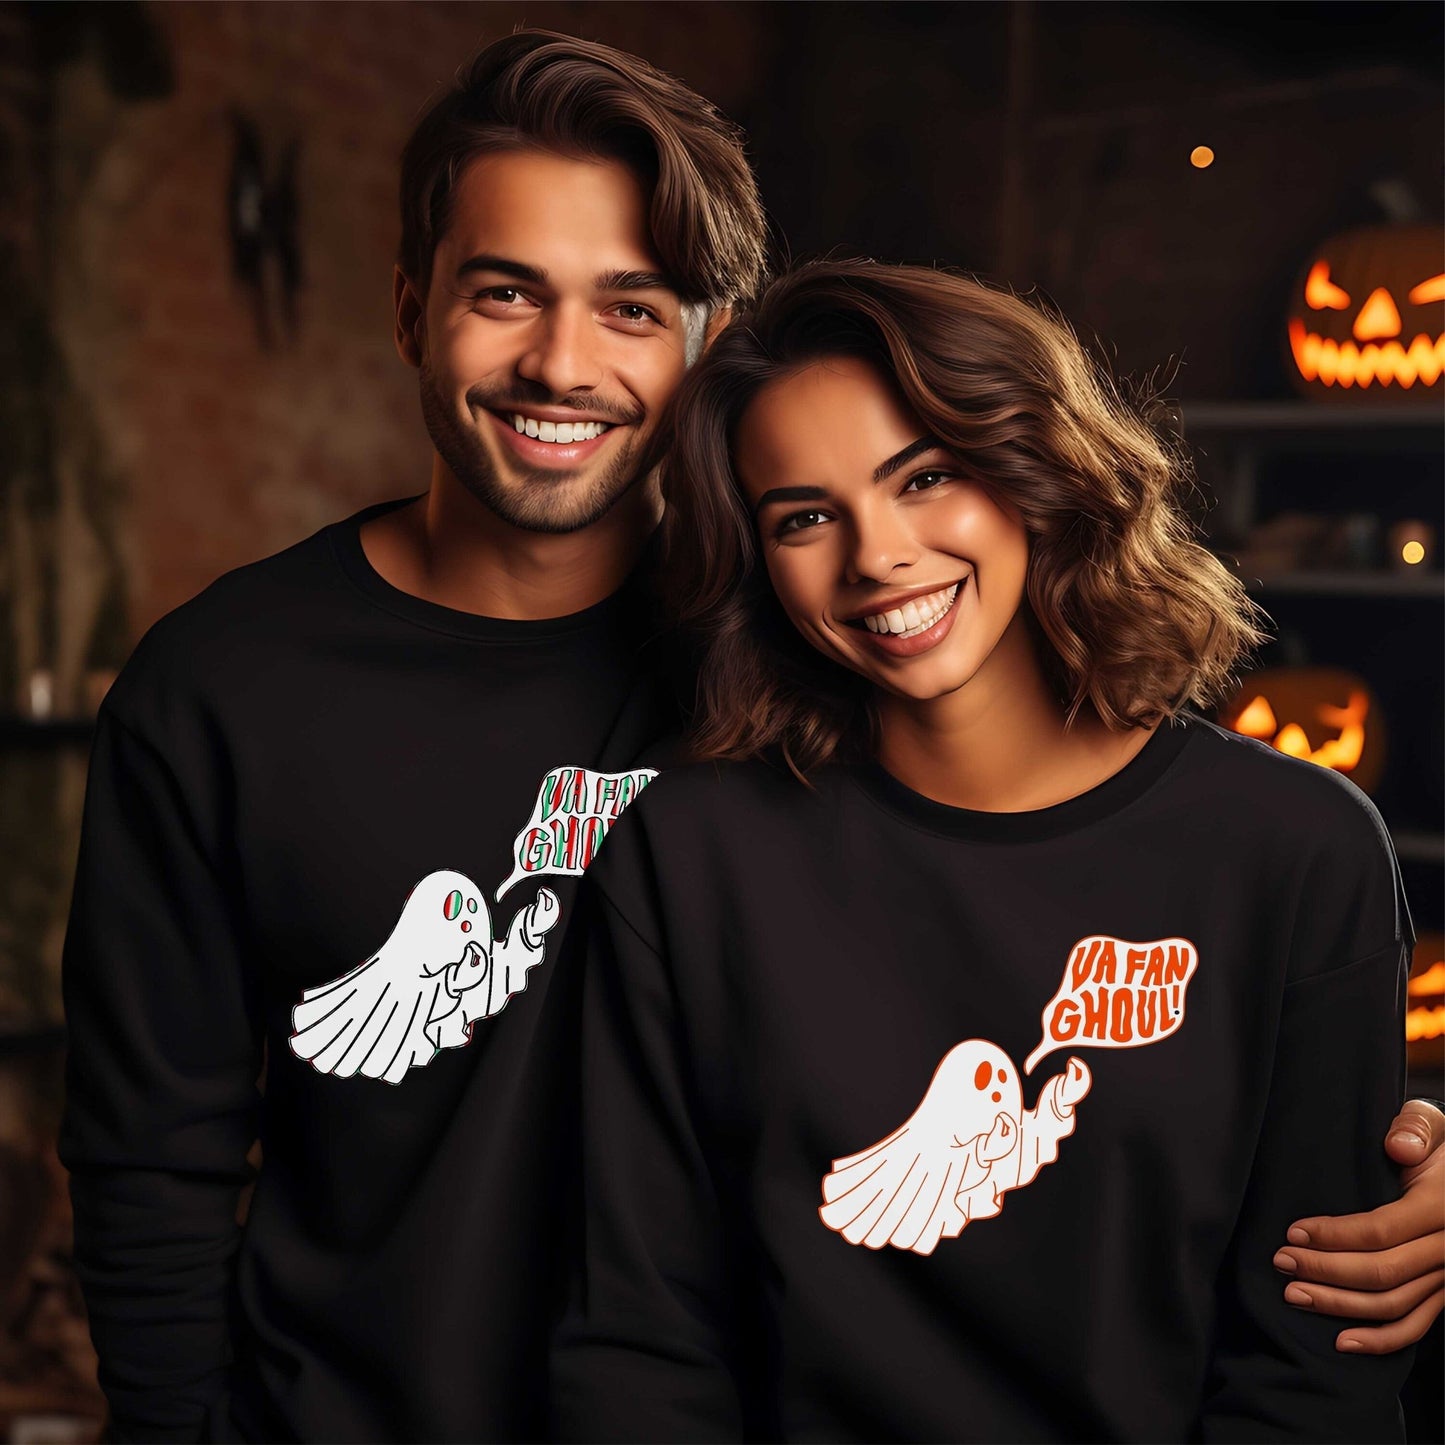 Va Fan Ghoul Sweatshirt, vaffanculo sweatshirt, Halloween Ghost sweatshir, Ghost crewneck Italian Halloween Shirt - SBS T Shop